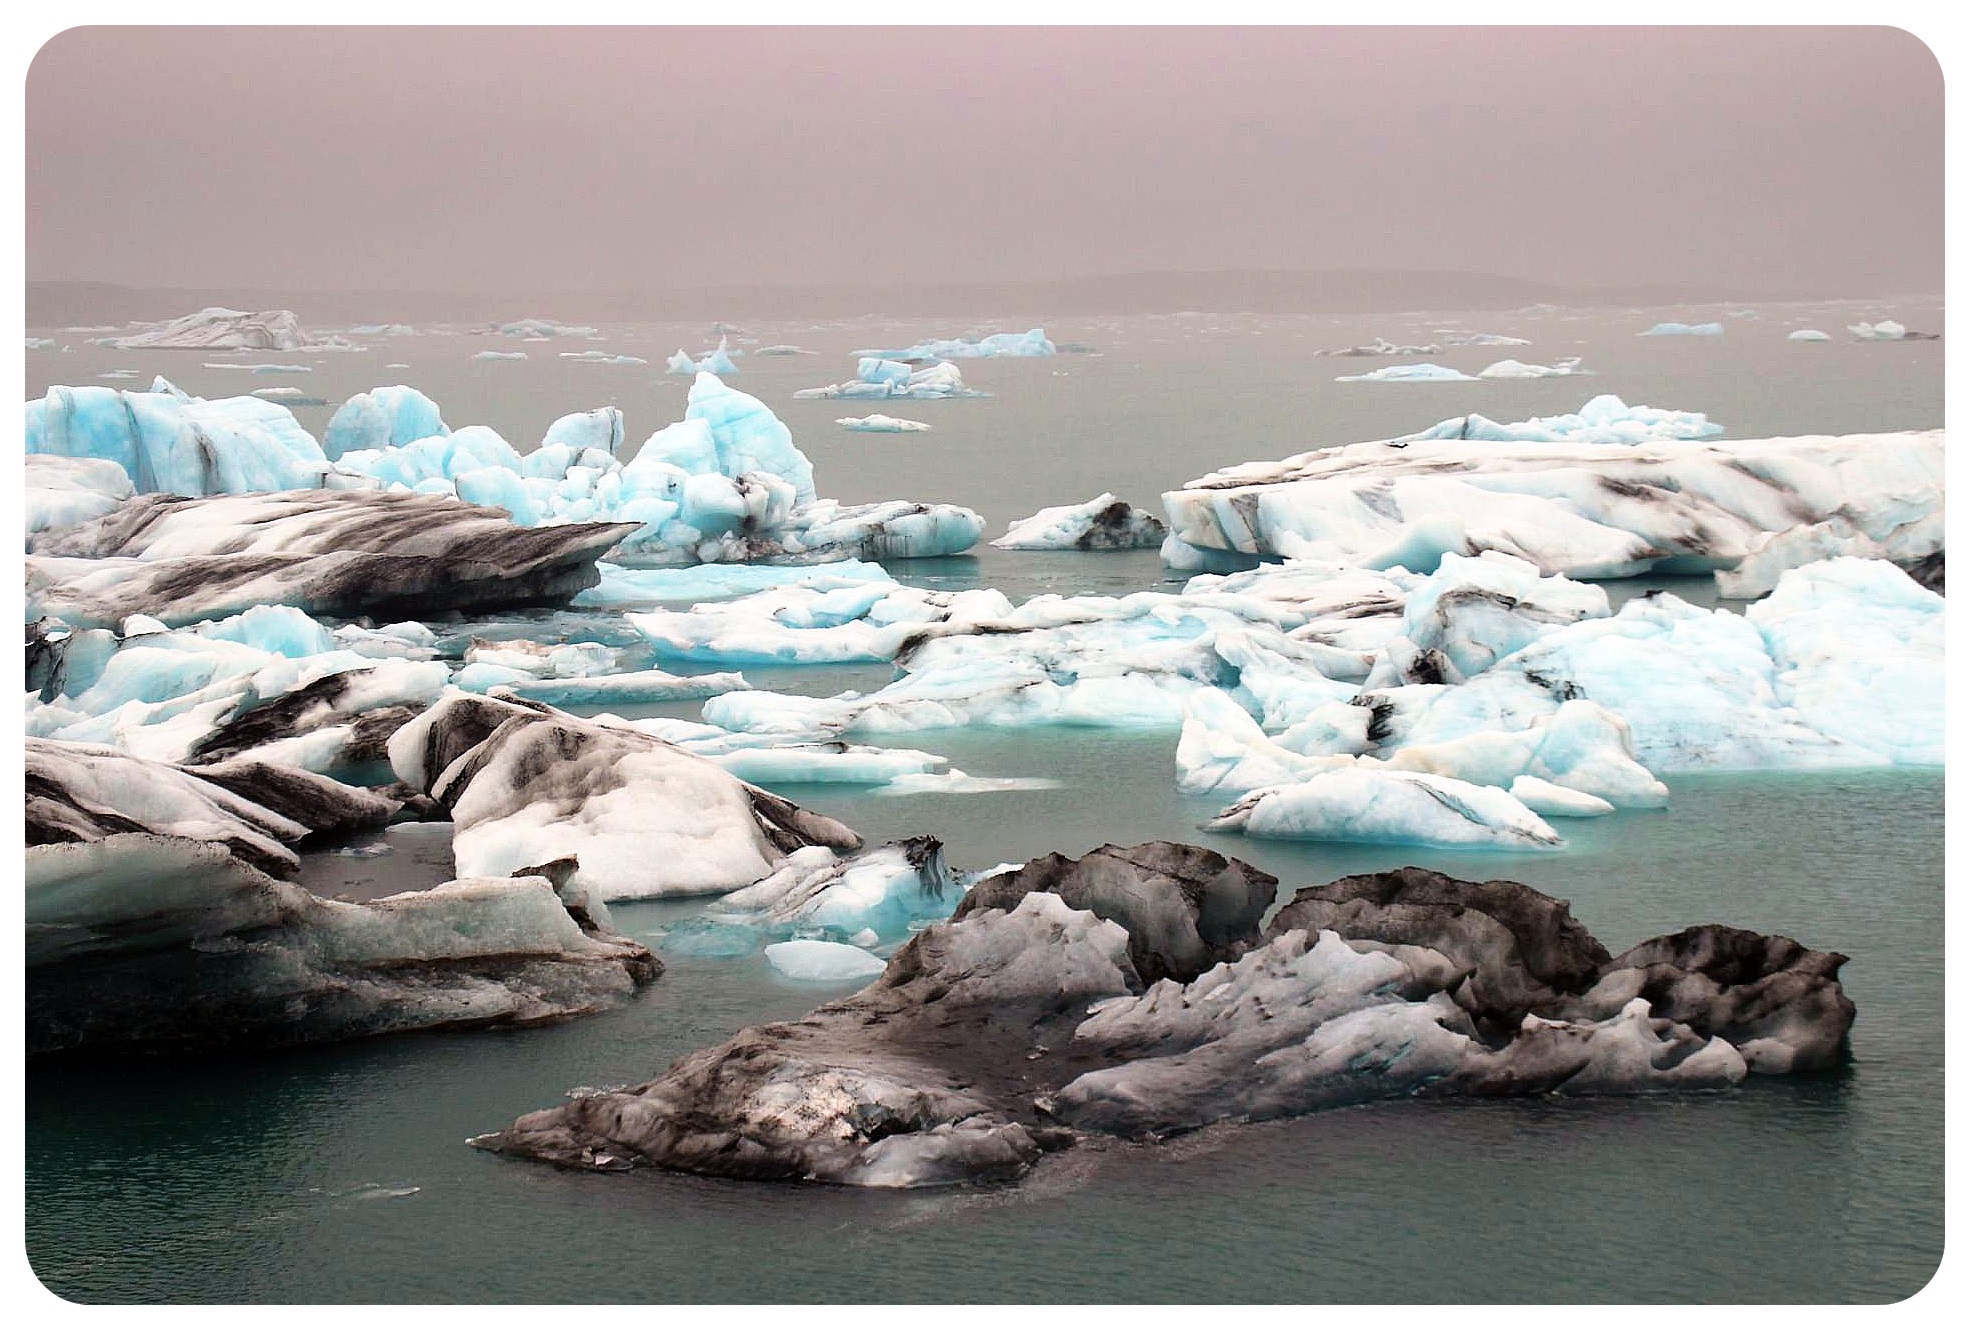 glacier lagoon iceland